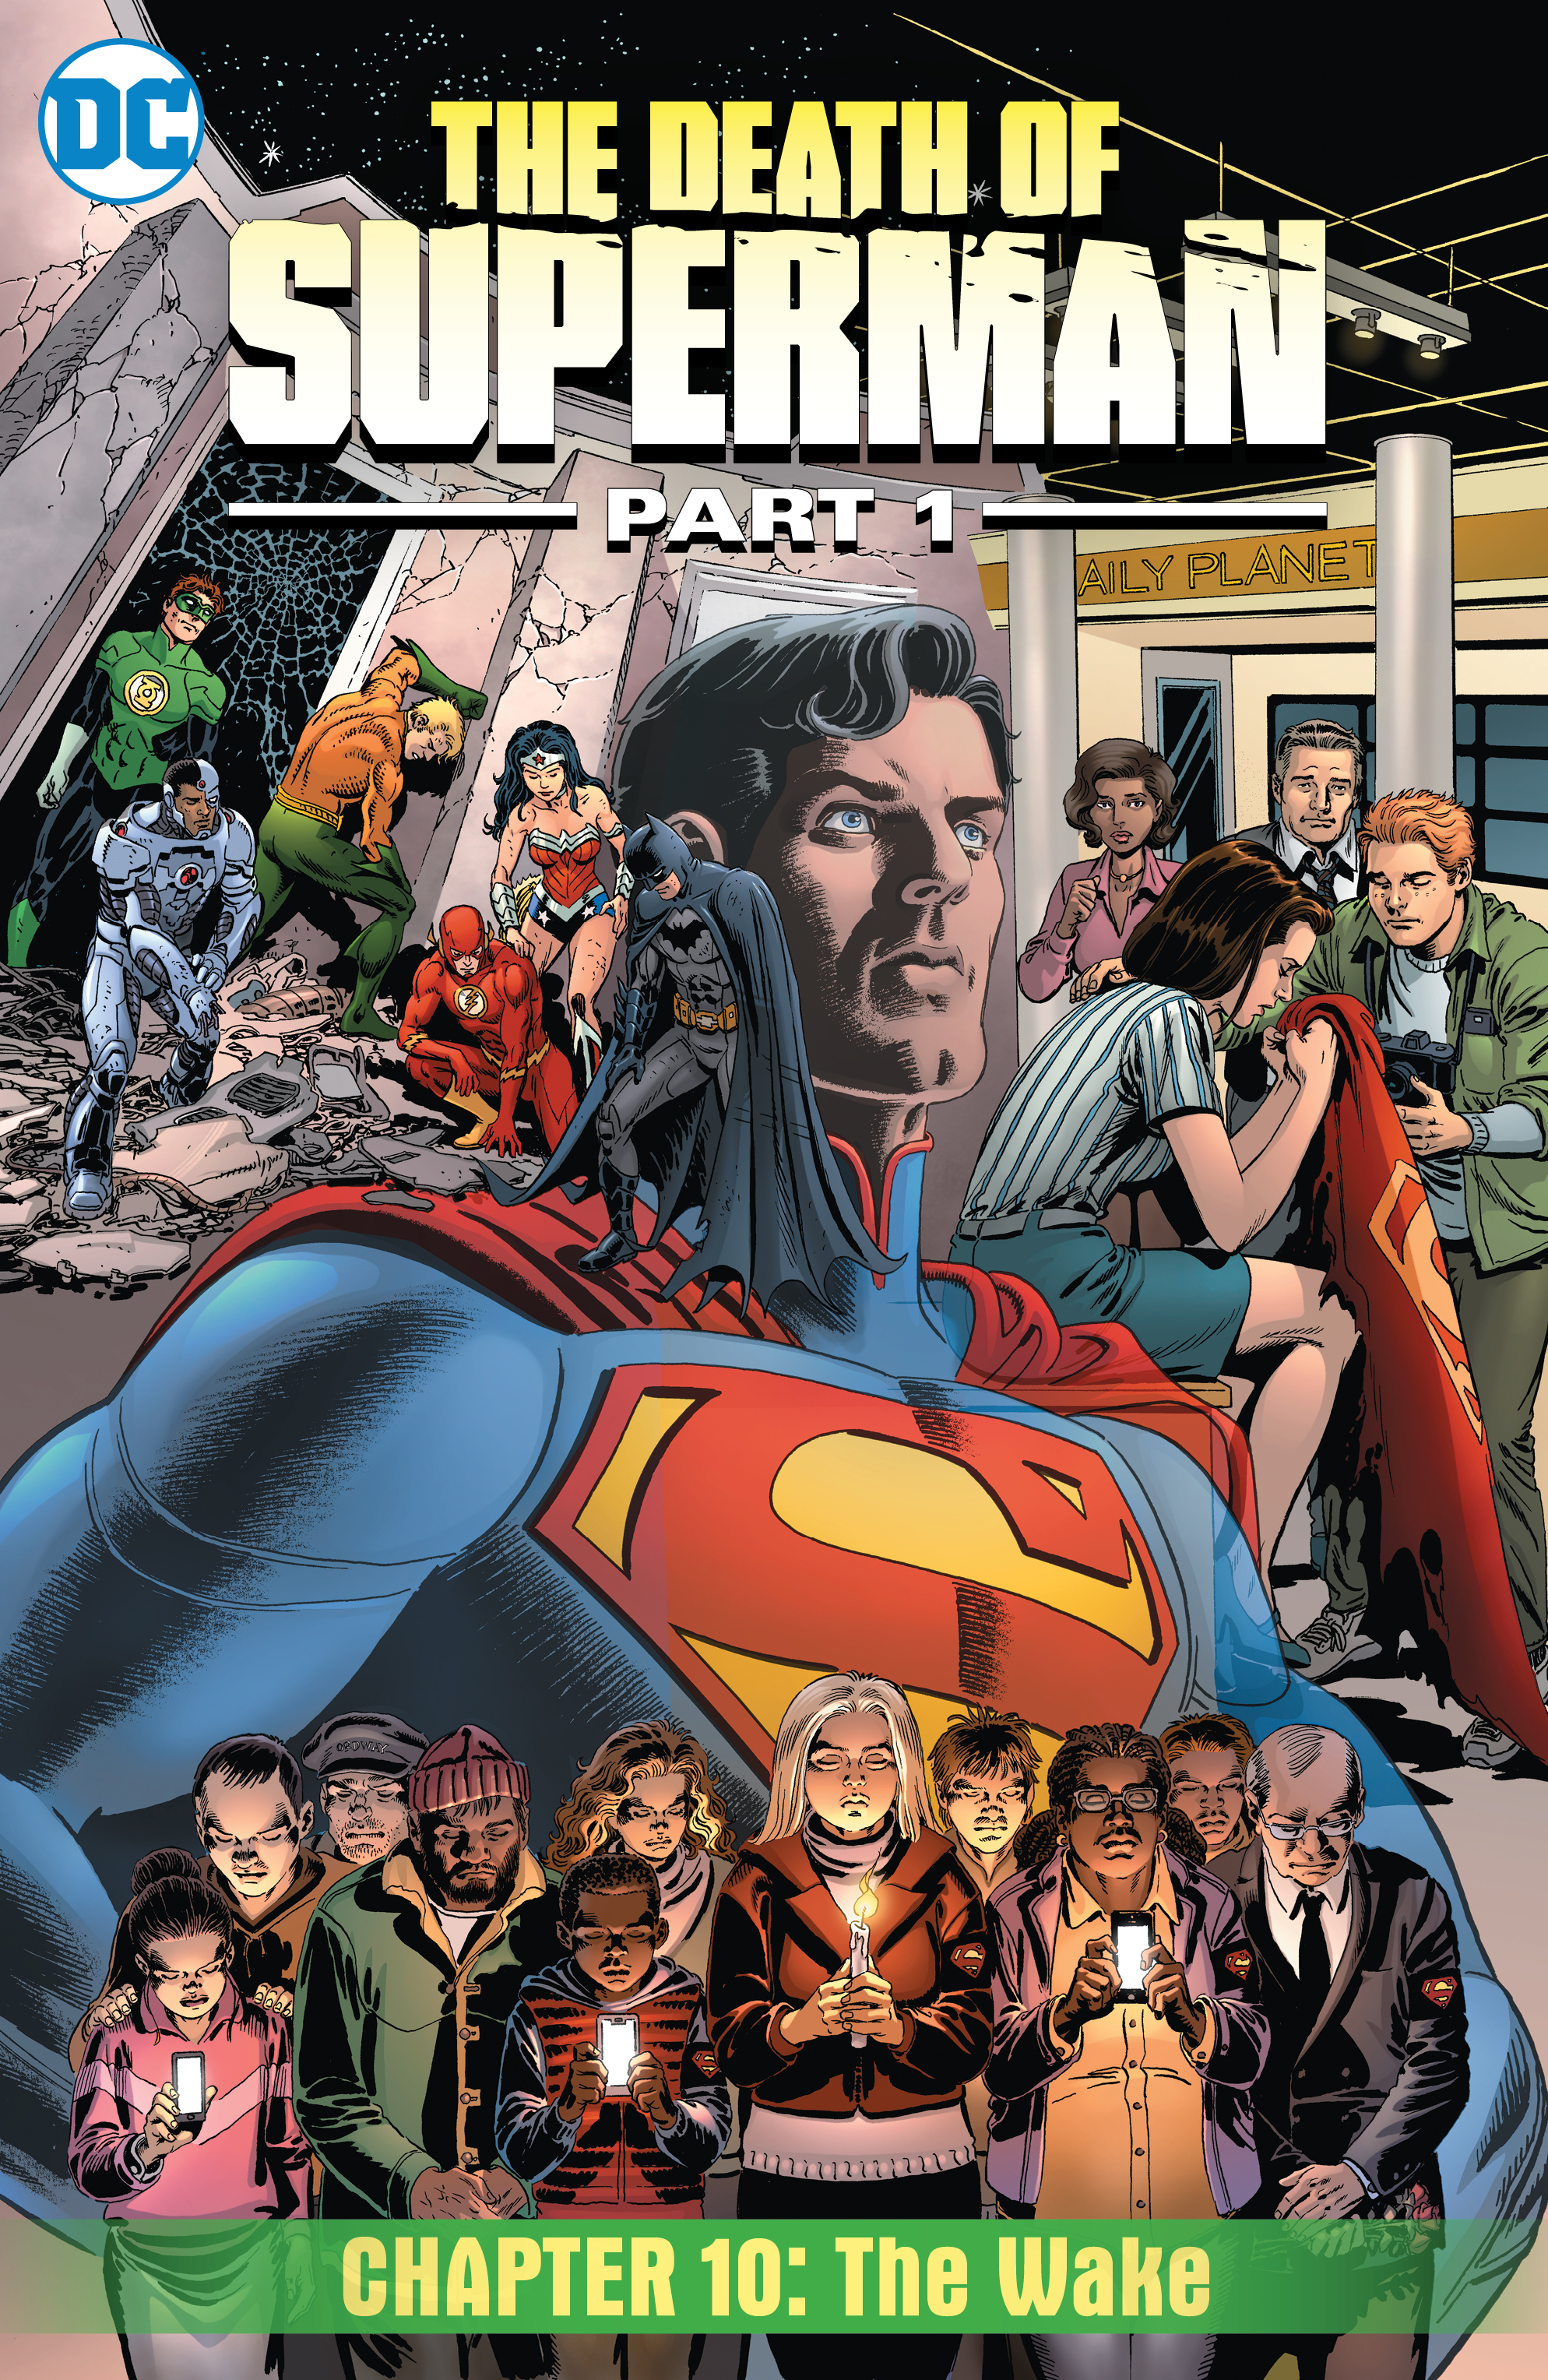 Death of Superman, Part 1 #10 preview images